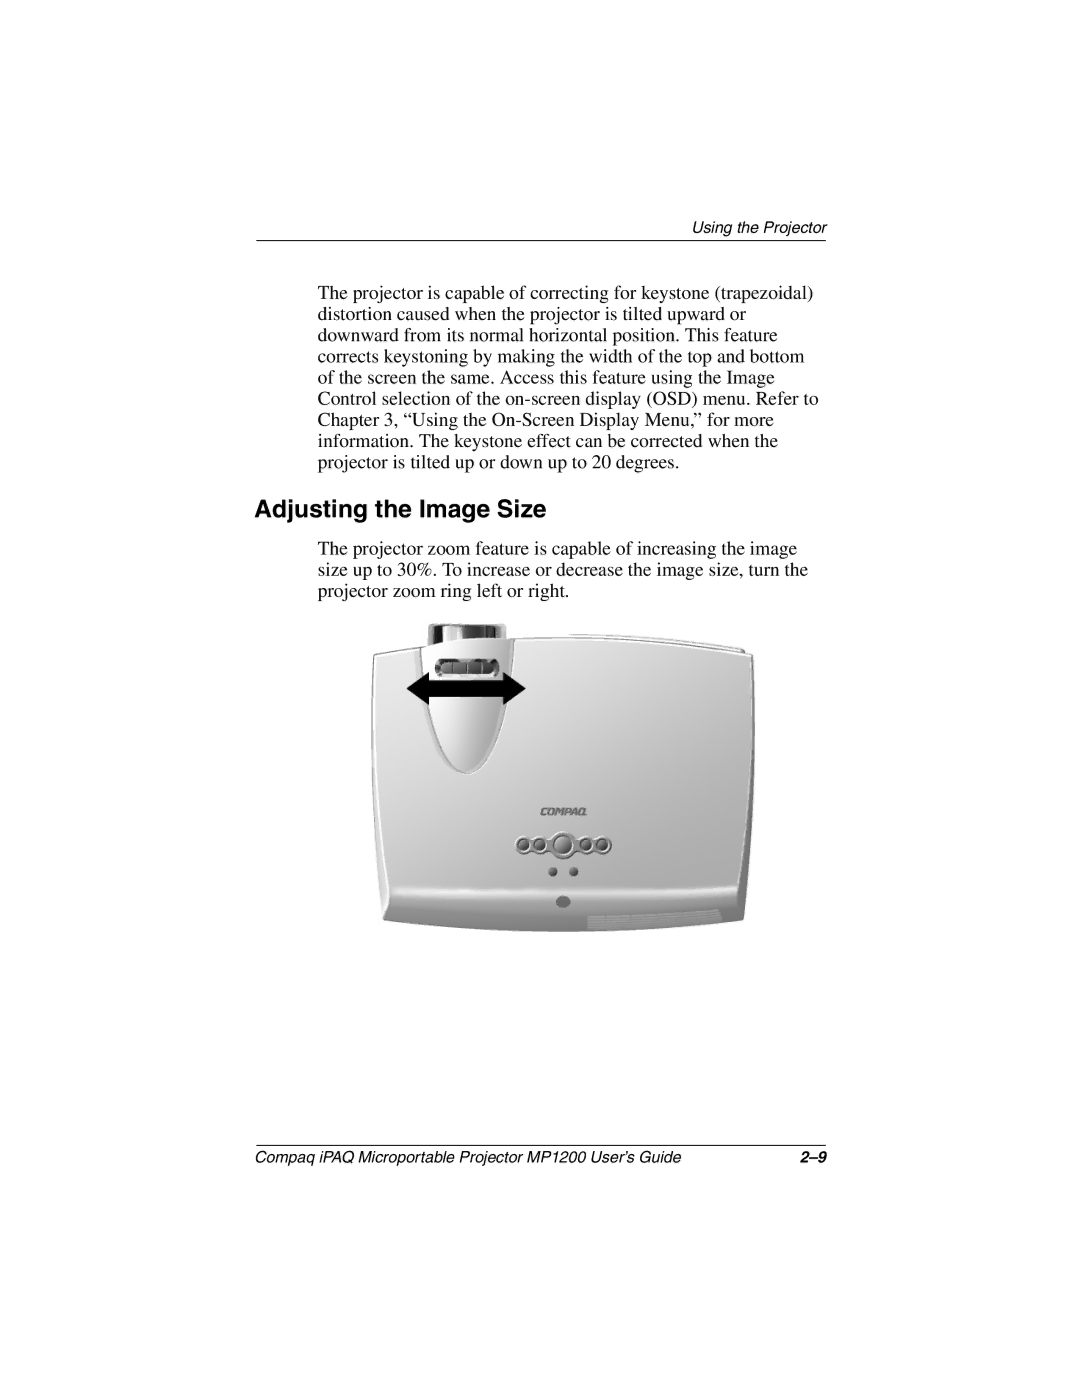 Compaq MP1200 manual Adjusting the Image Size 